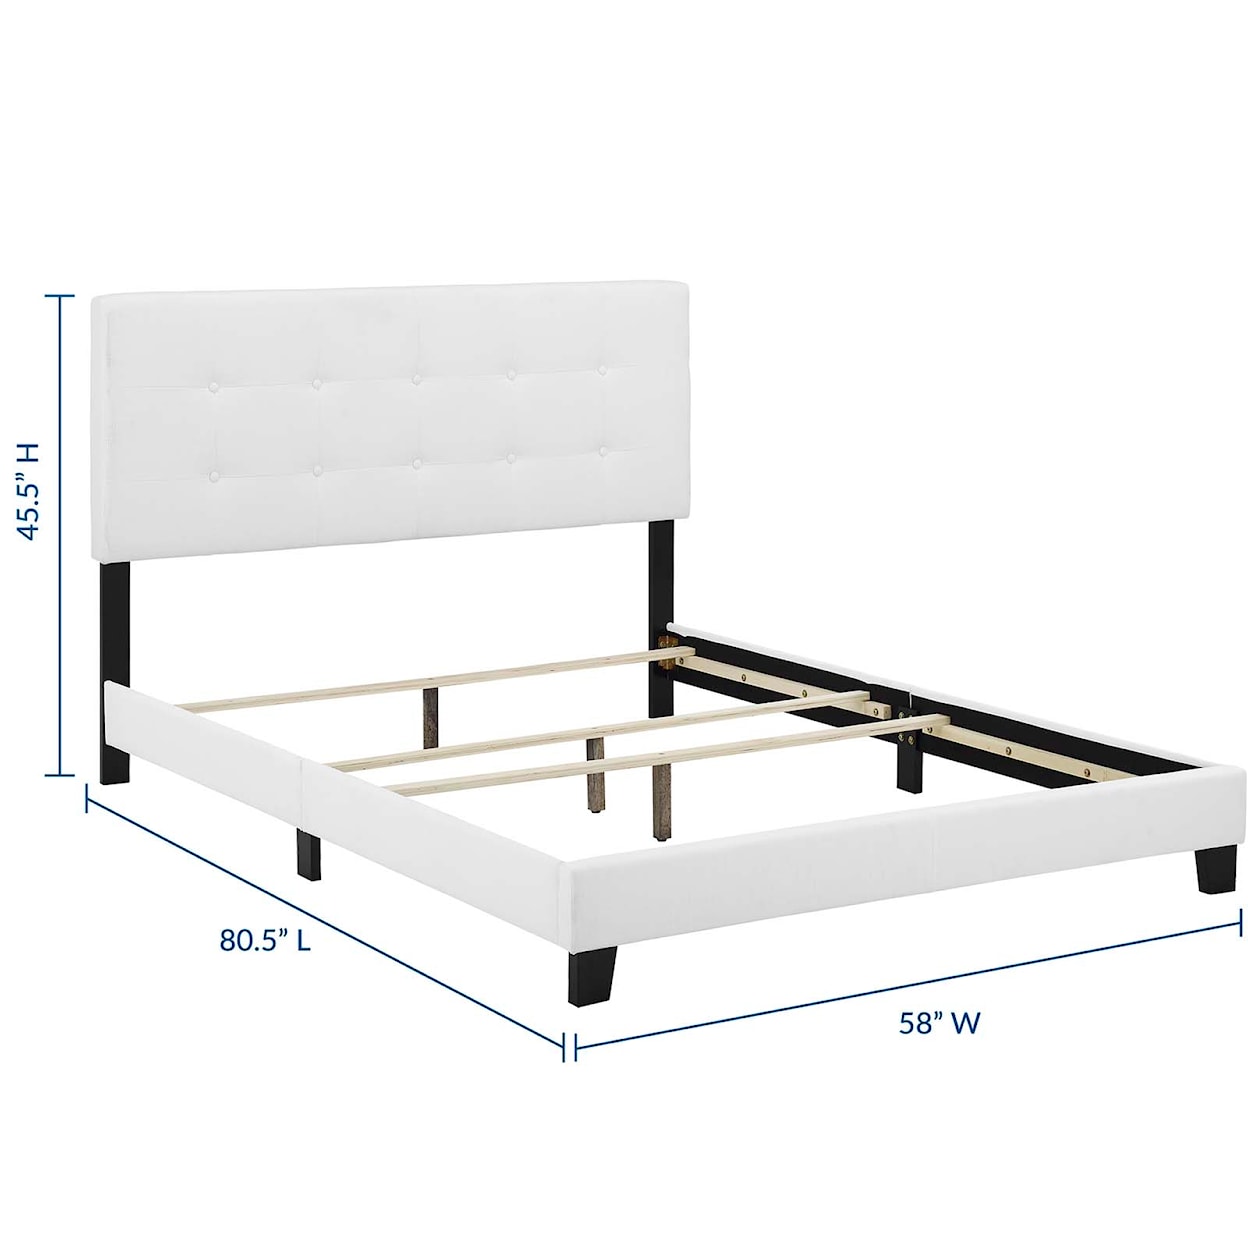 Modway Amira Full Upholstered Bed